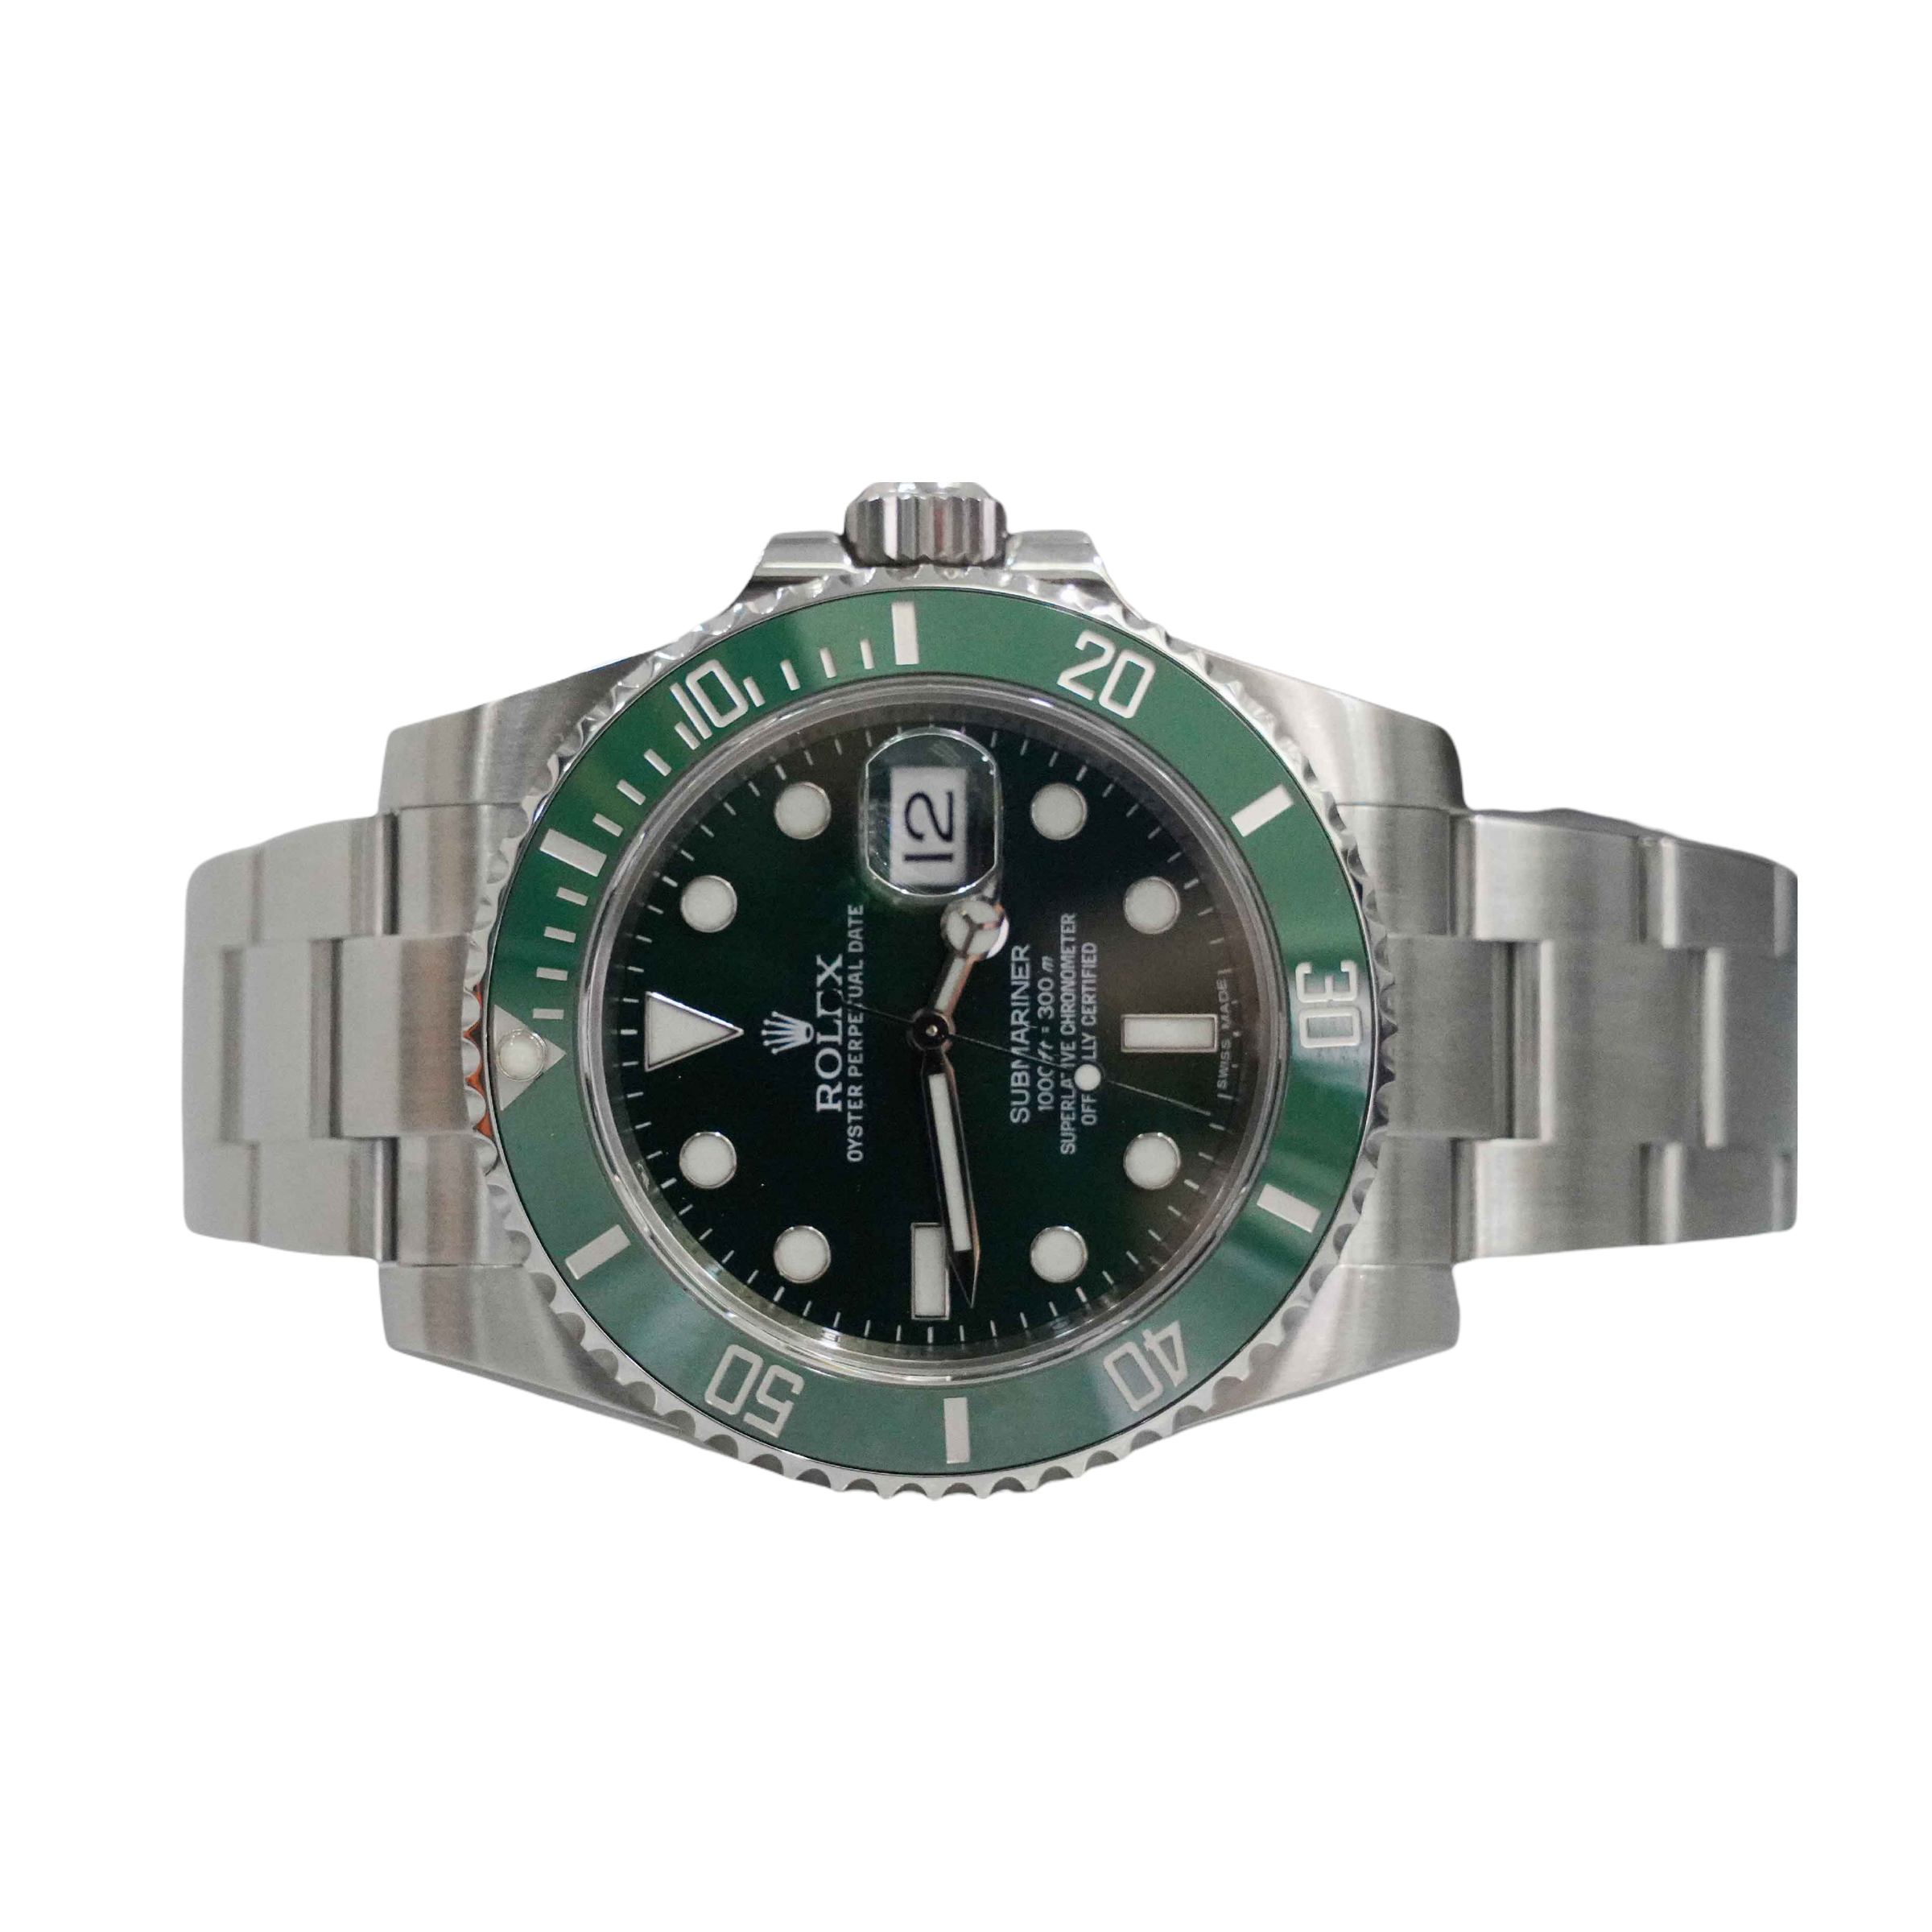 Rolex Submariner Date Stainless Steel Green Dial Hulk 116610LV